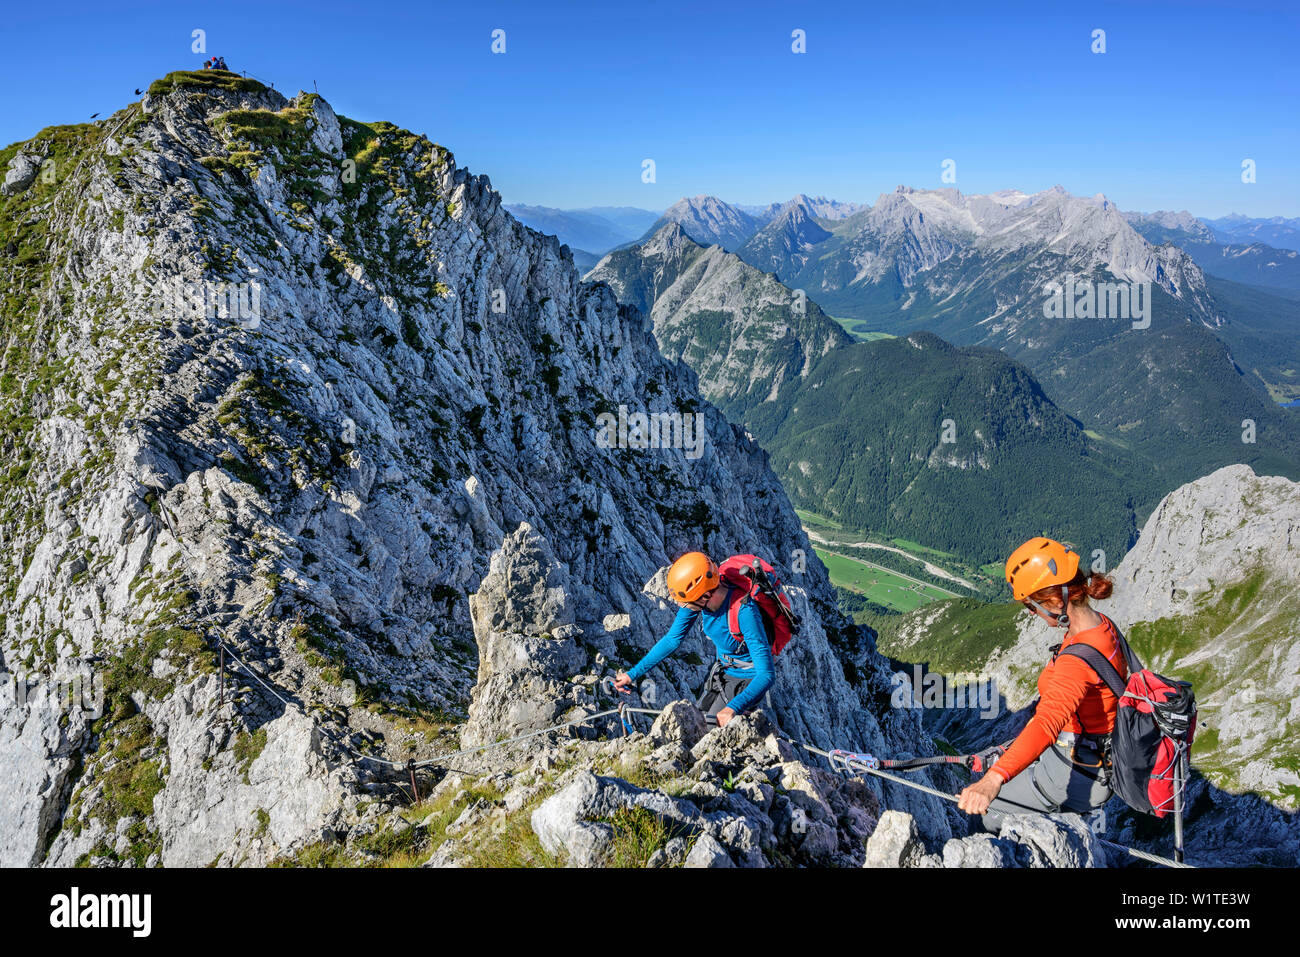 Two women climbing on fixed-rope route Mittenwalder Hoehenweg, Wetterstein range in background, fixed-rope route Mittenwalder Hoehenweg, Karwendel ran Stock Photo